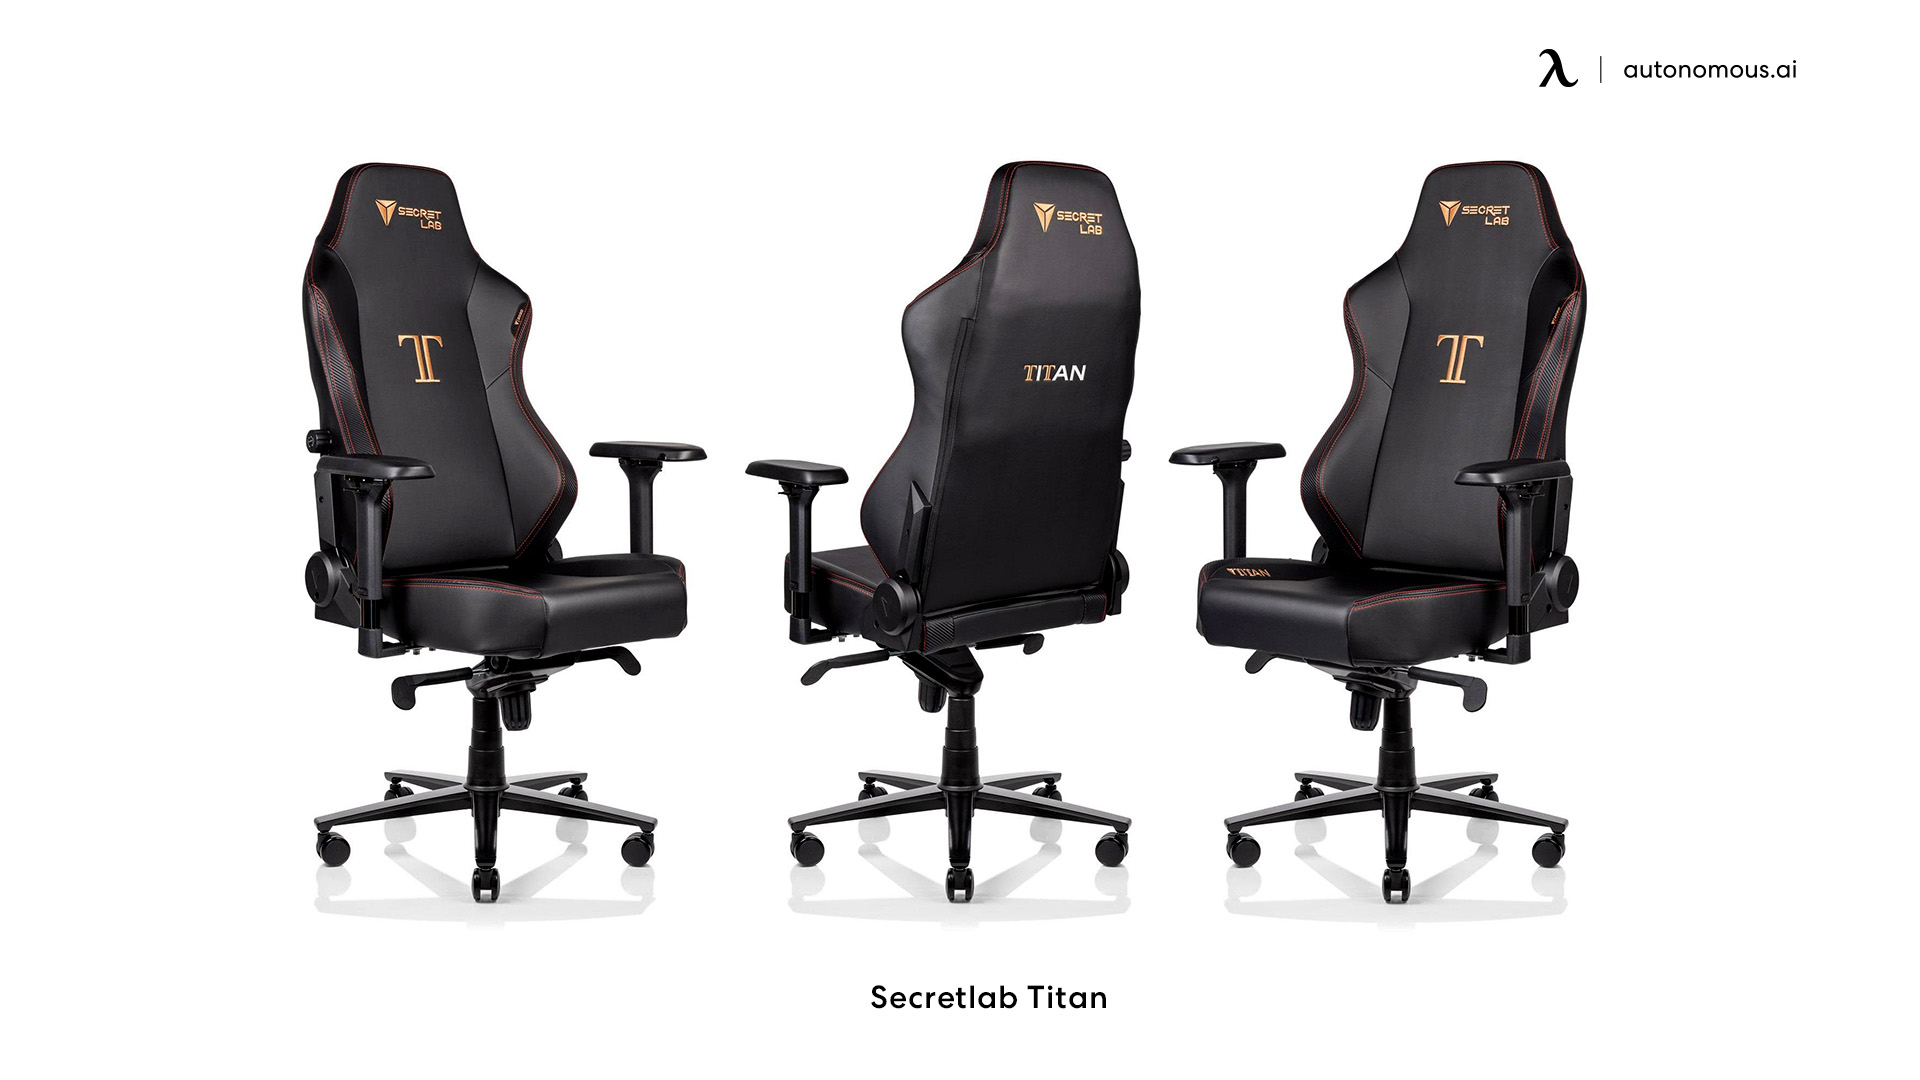 Secretlab Titan black home office chair